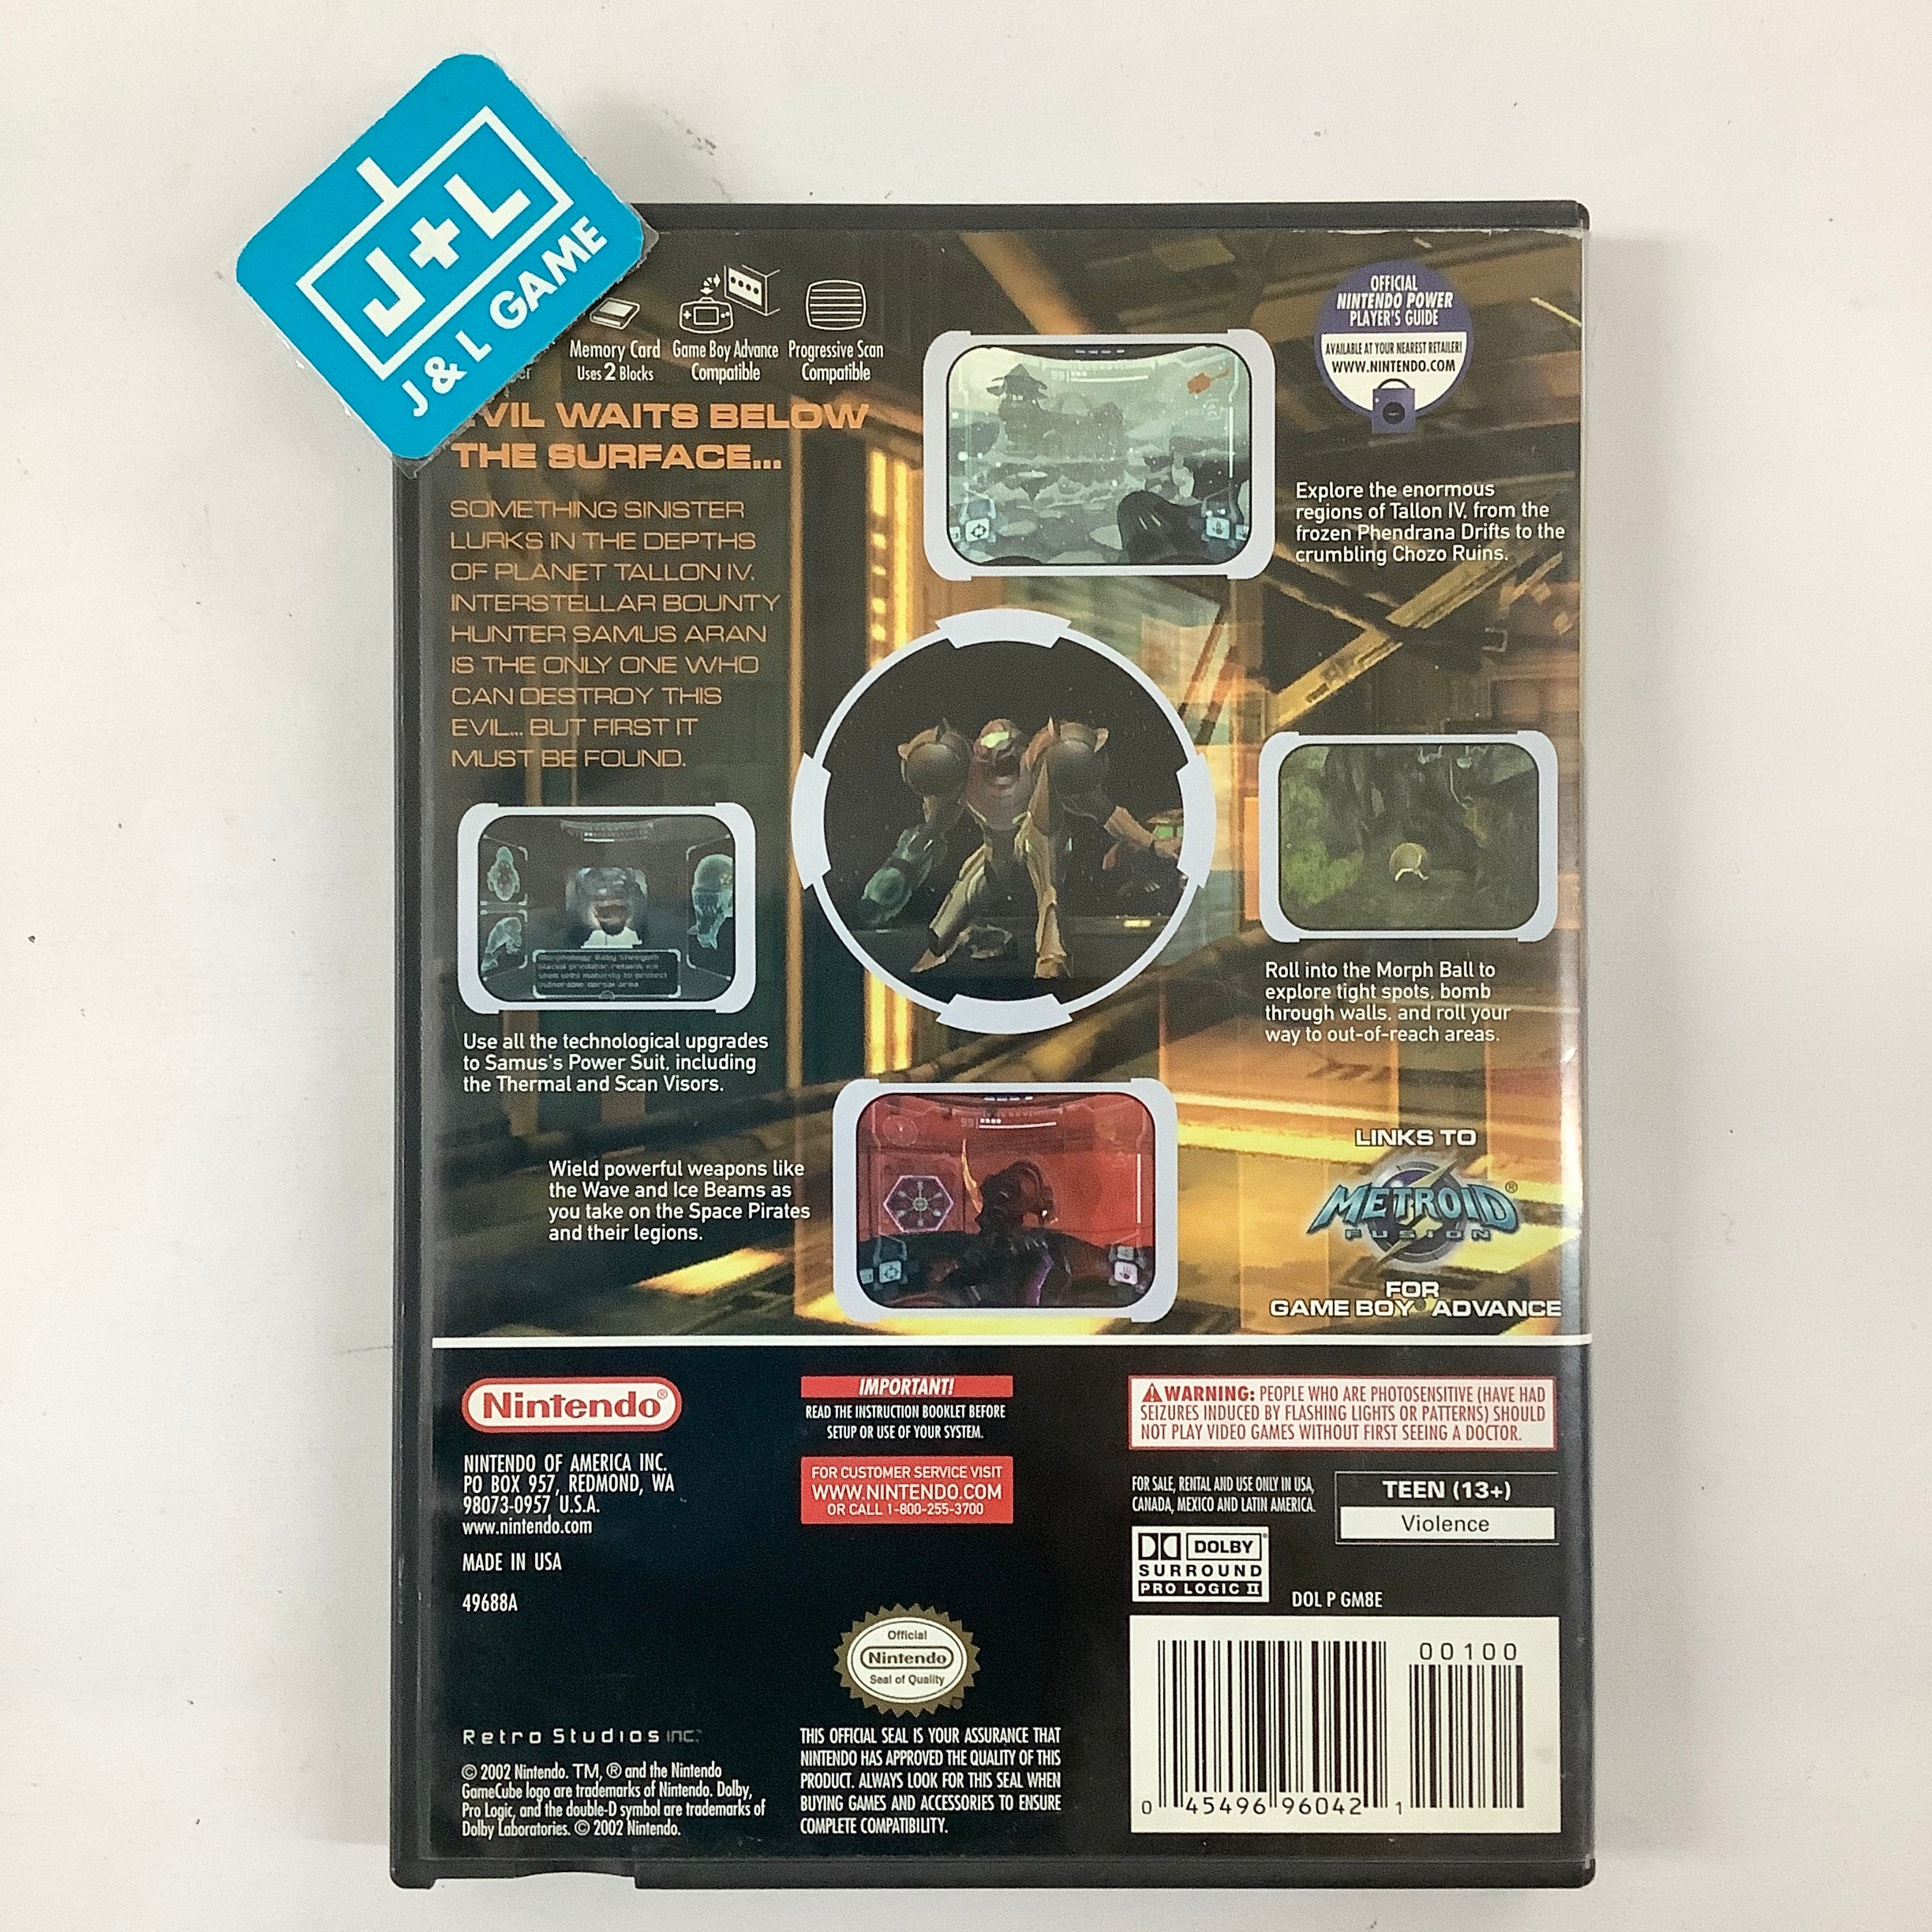 Metroid Prime - (GC) GameCube [Pre-Owned] Video Games Nintendo   